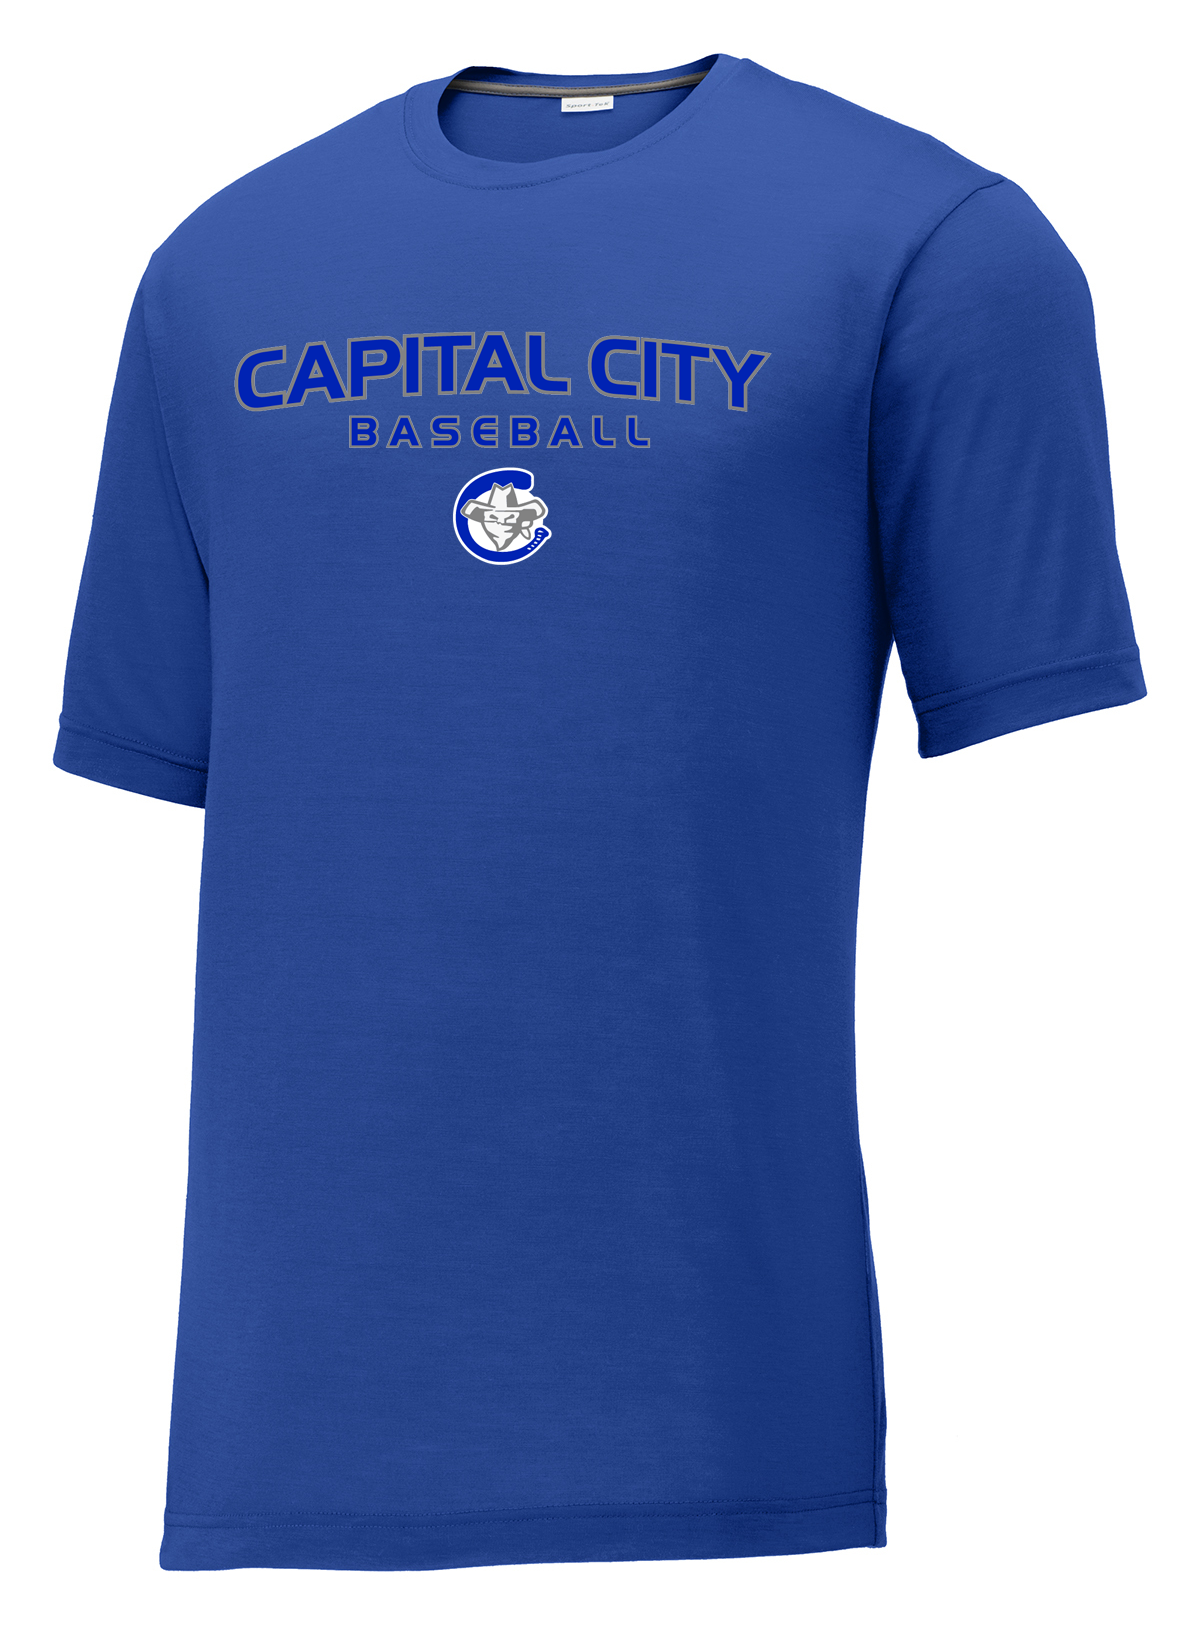 Capital City Baseball CottonTouch Performance T-Shirt